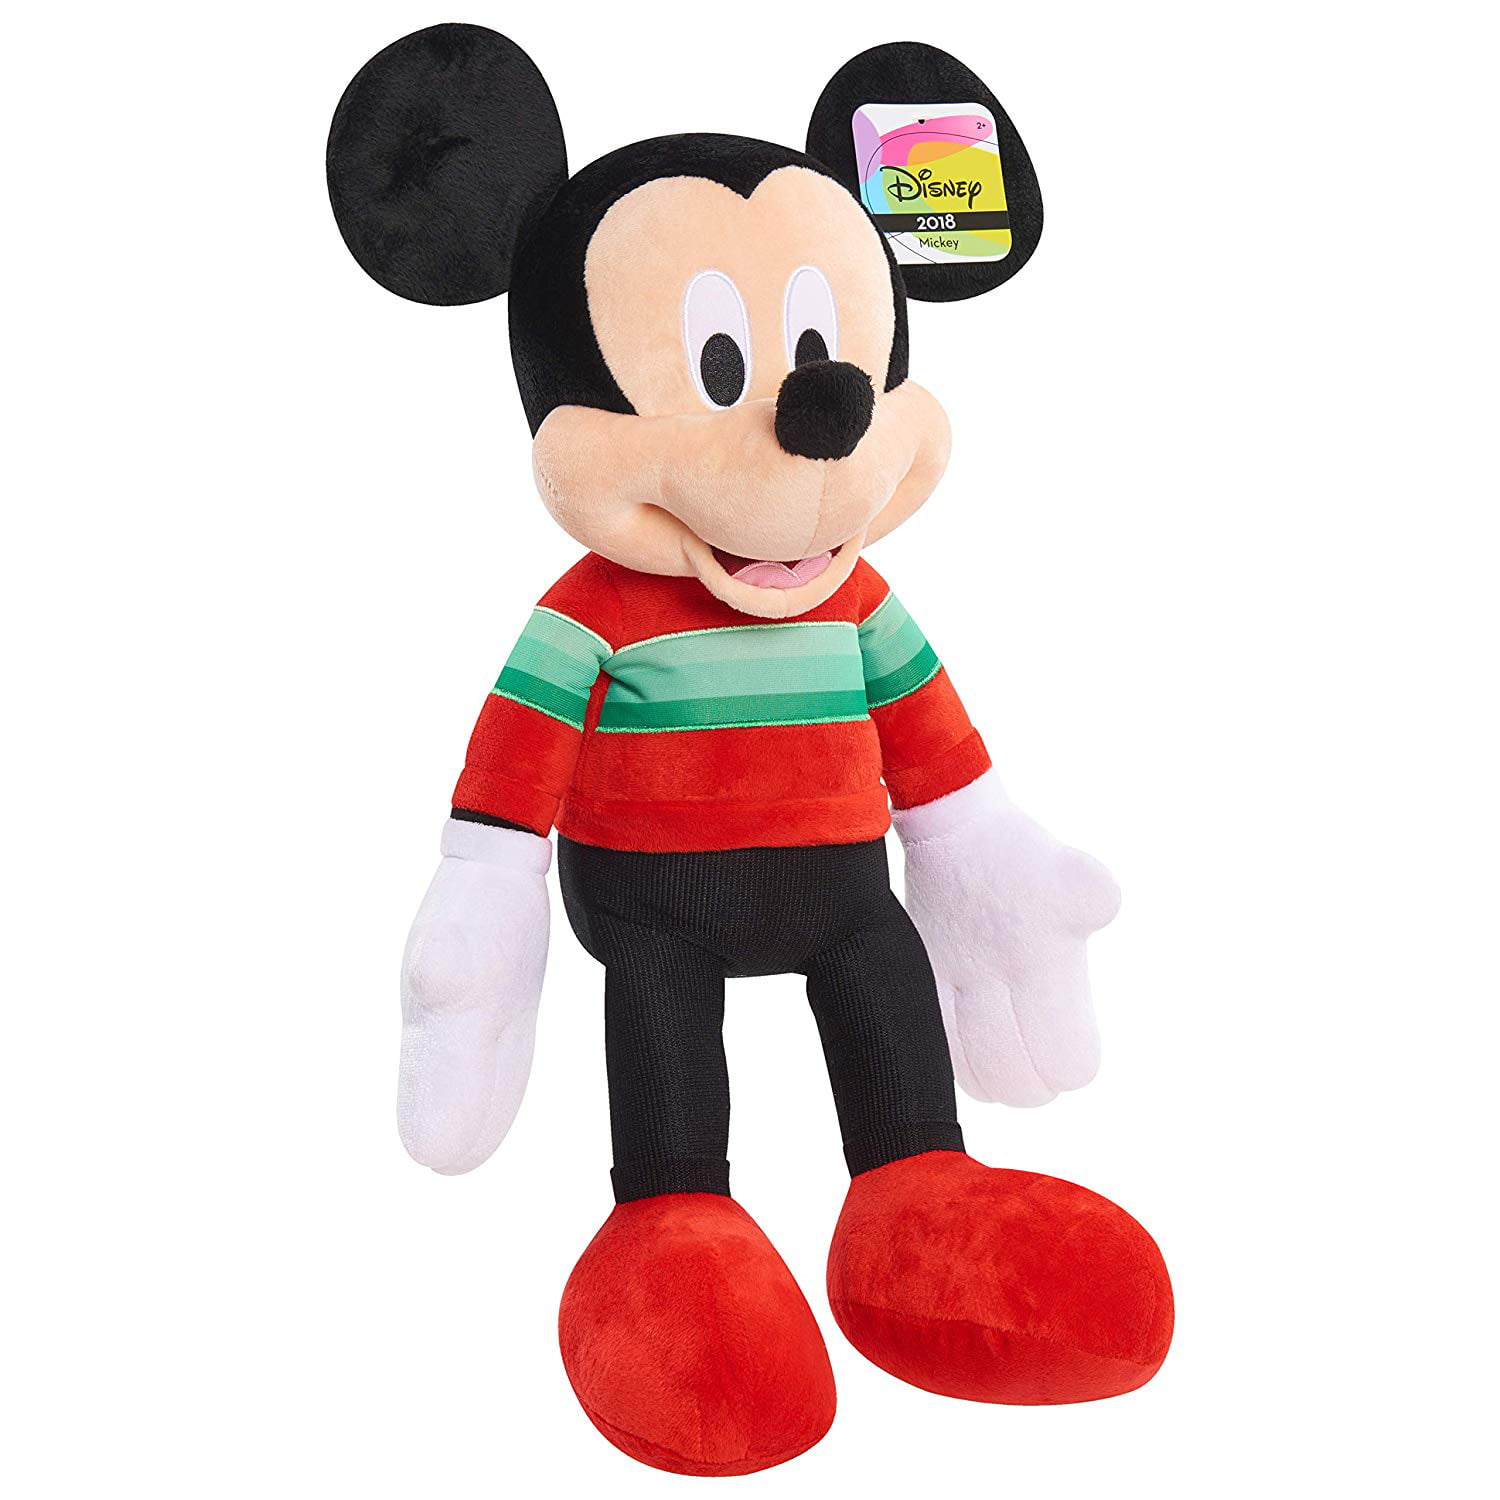 disney mickey mouse holiday 2018 plush